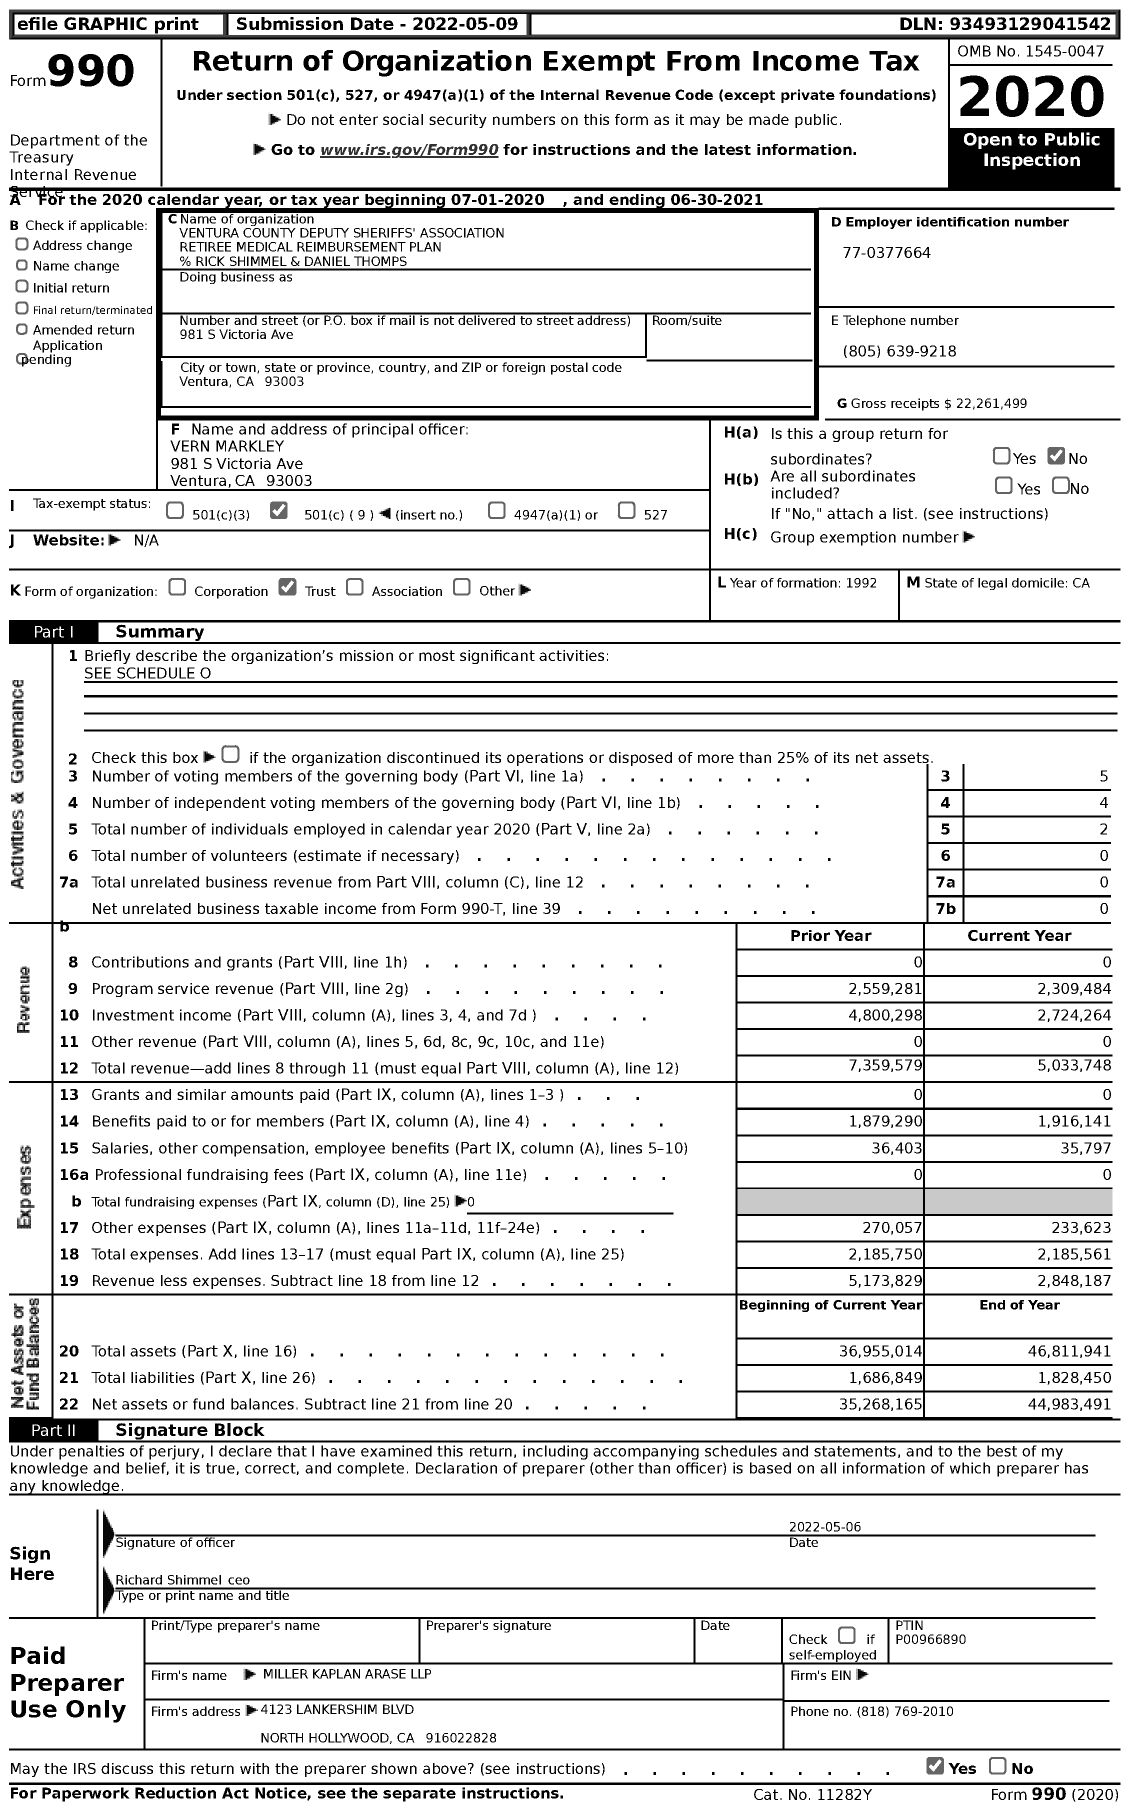 Image of first page of 2020 Form 990 for Ventura County Deputy Sheriffs' Association Retiree Medical Reimbursement Plan